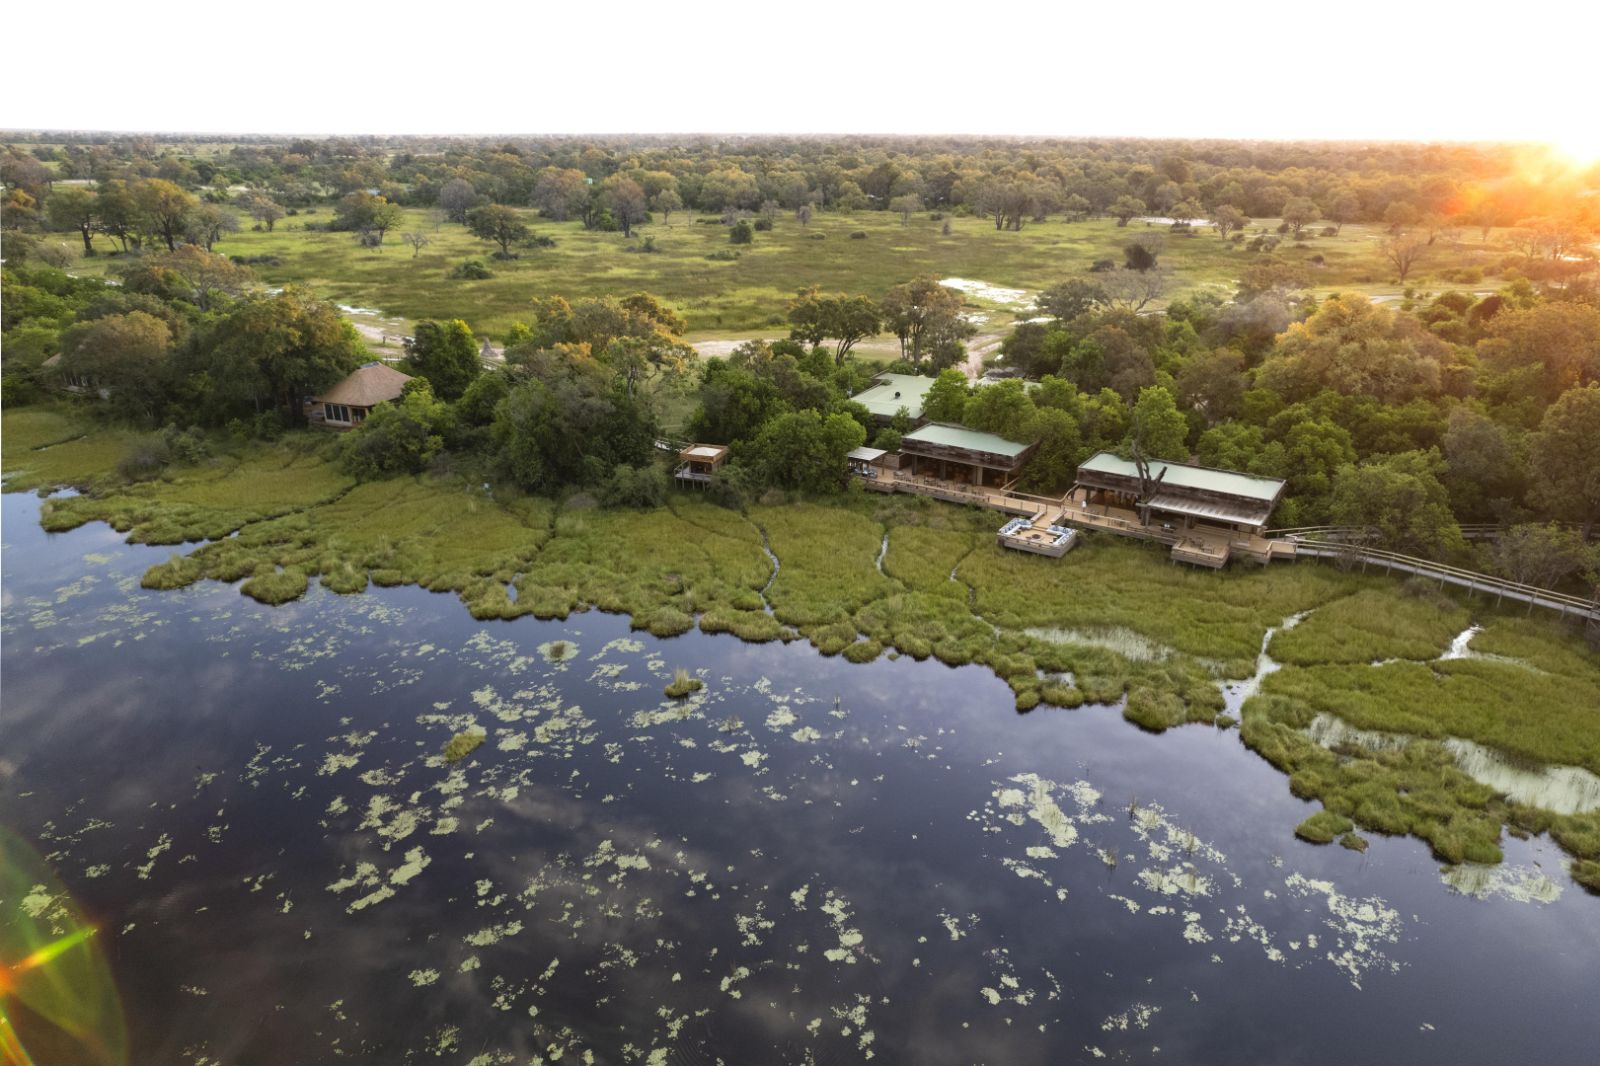 Aerial view of Vumbura Plains in Botswana's Okavango Delta